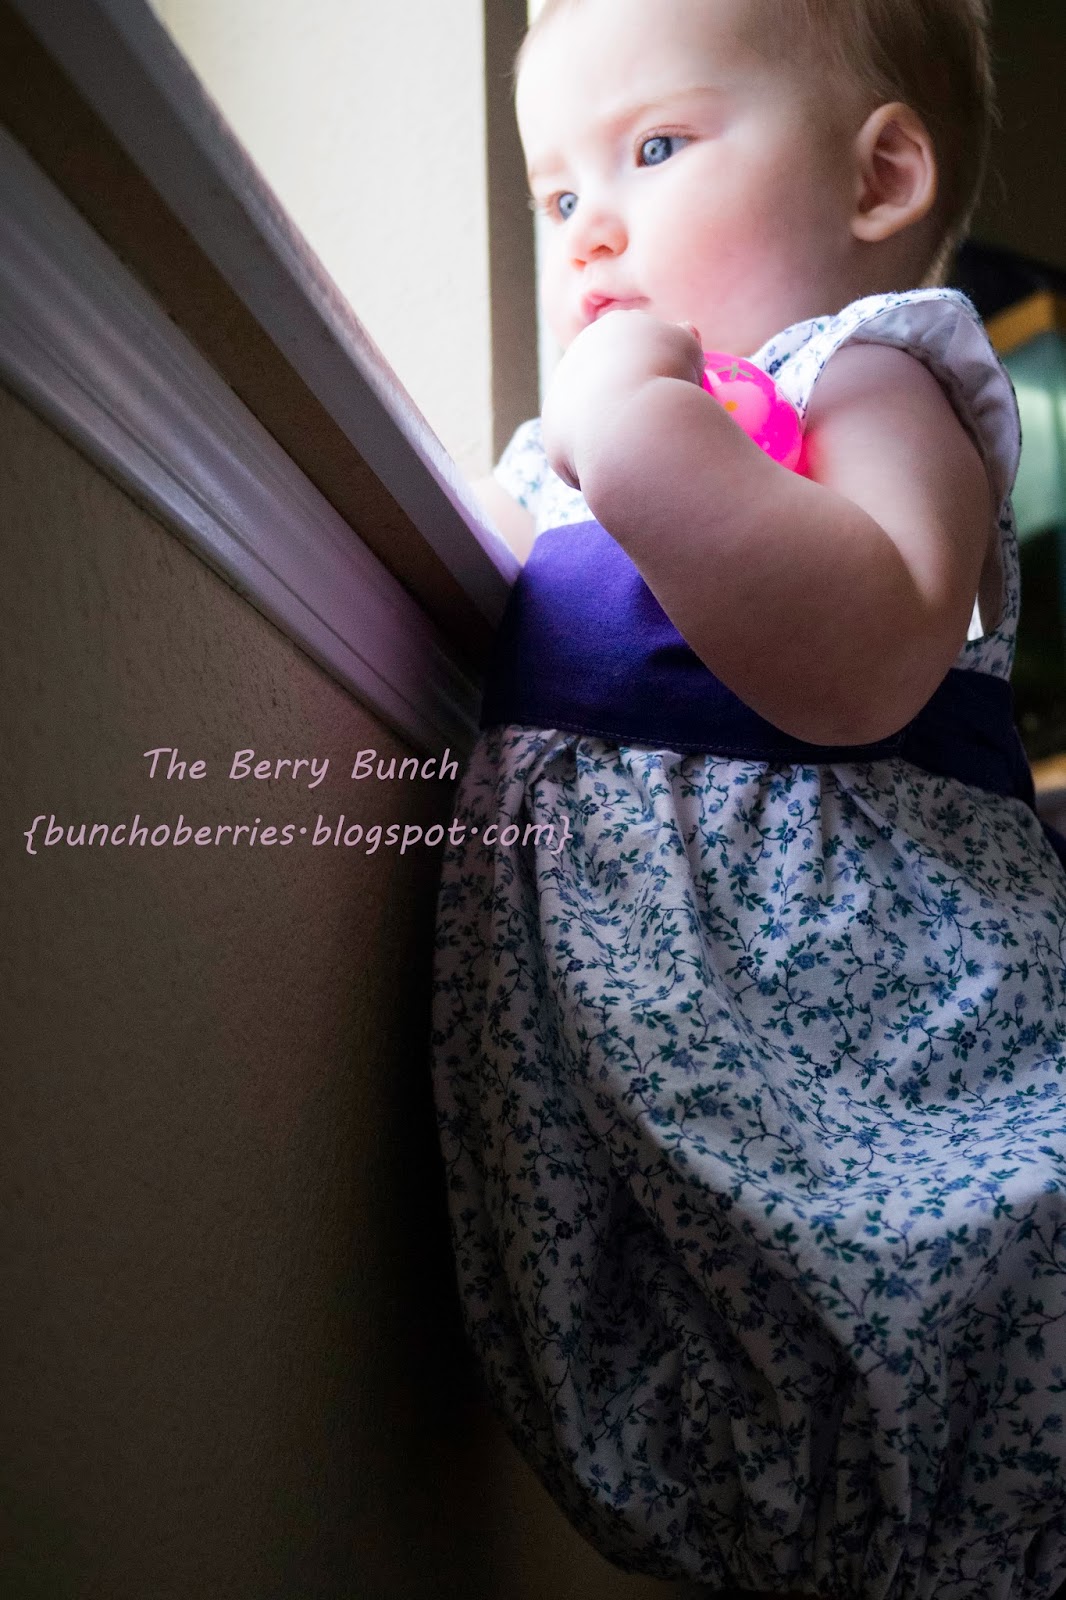 berry bunch - kenzie's party dress - 2192046 - 20140219-2